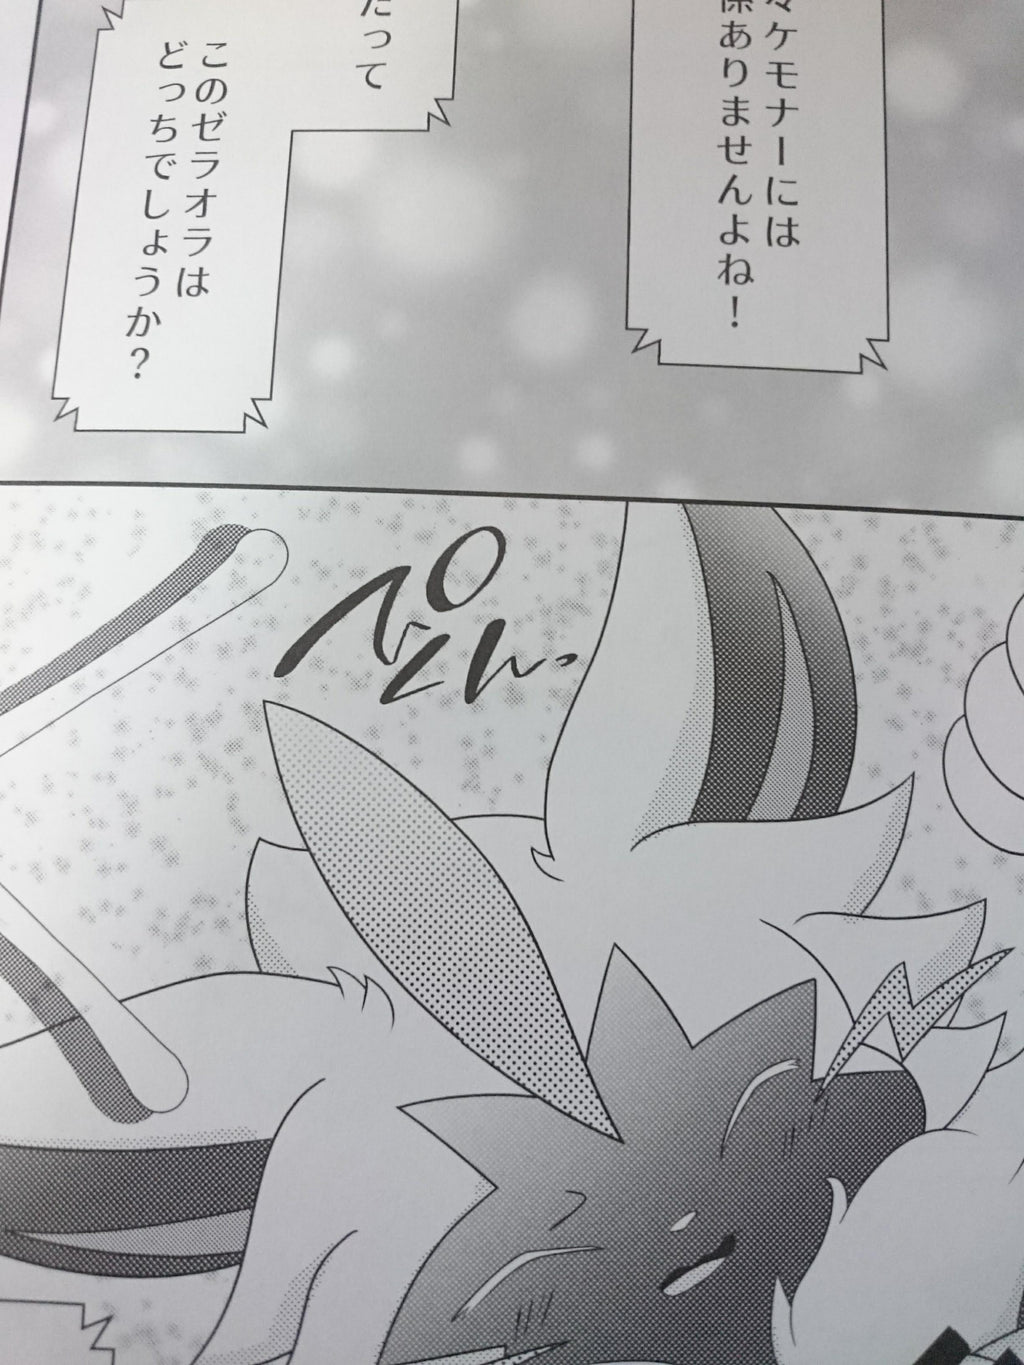 Doujinshi Pokemon Zeraora (B5 76pages) furry Ikaneko Ikanyan matome tettei